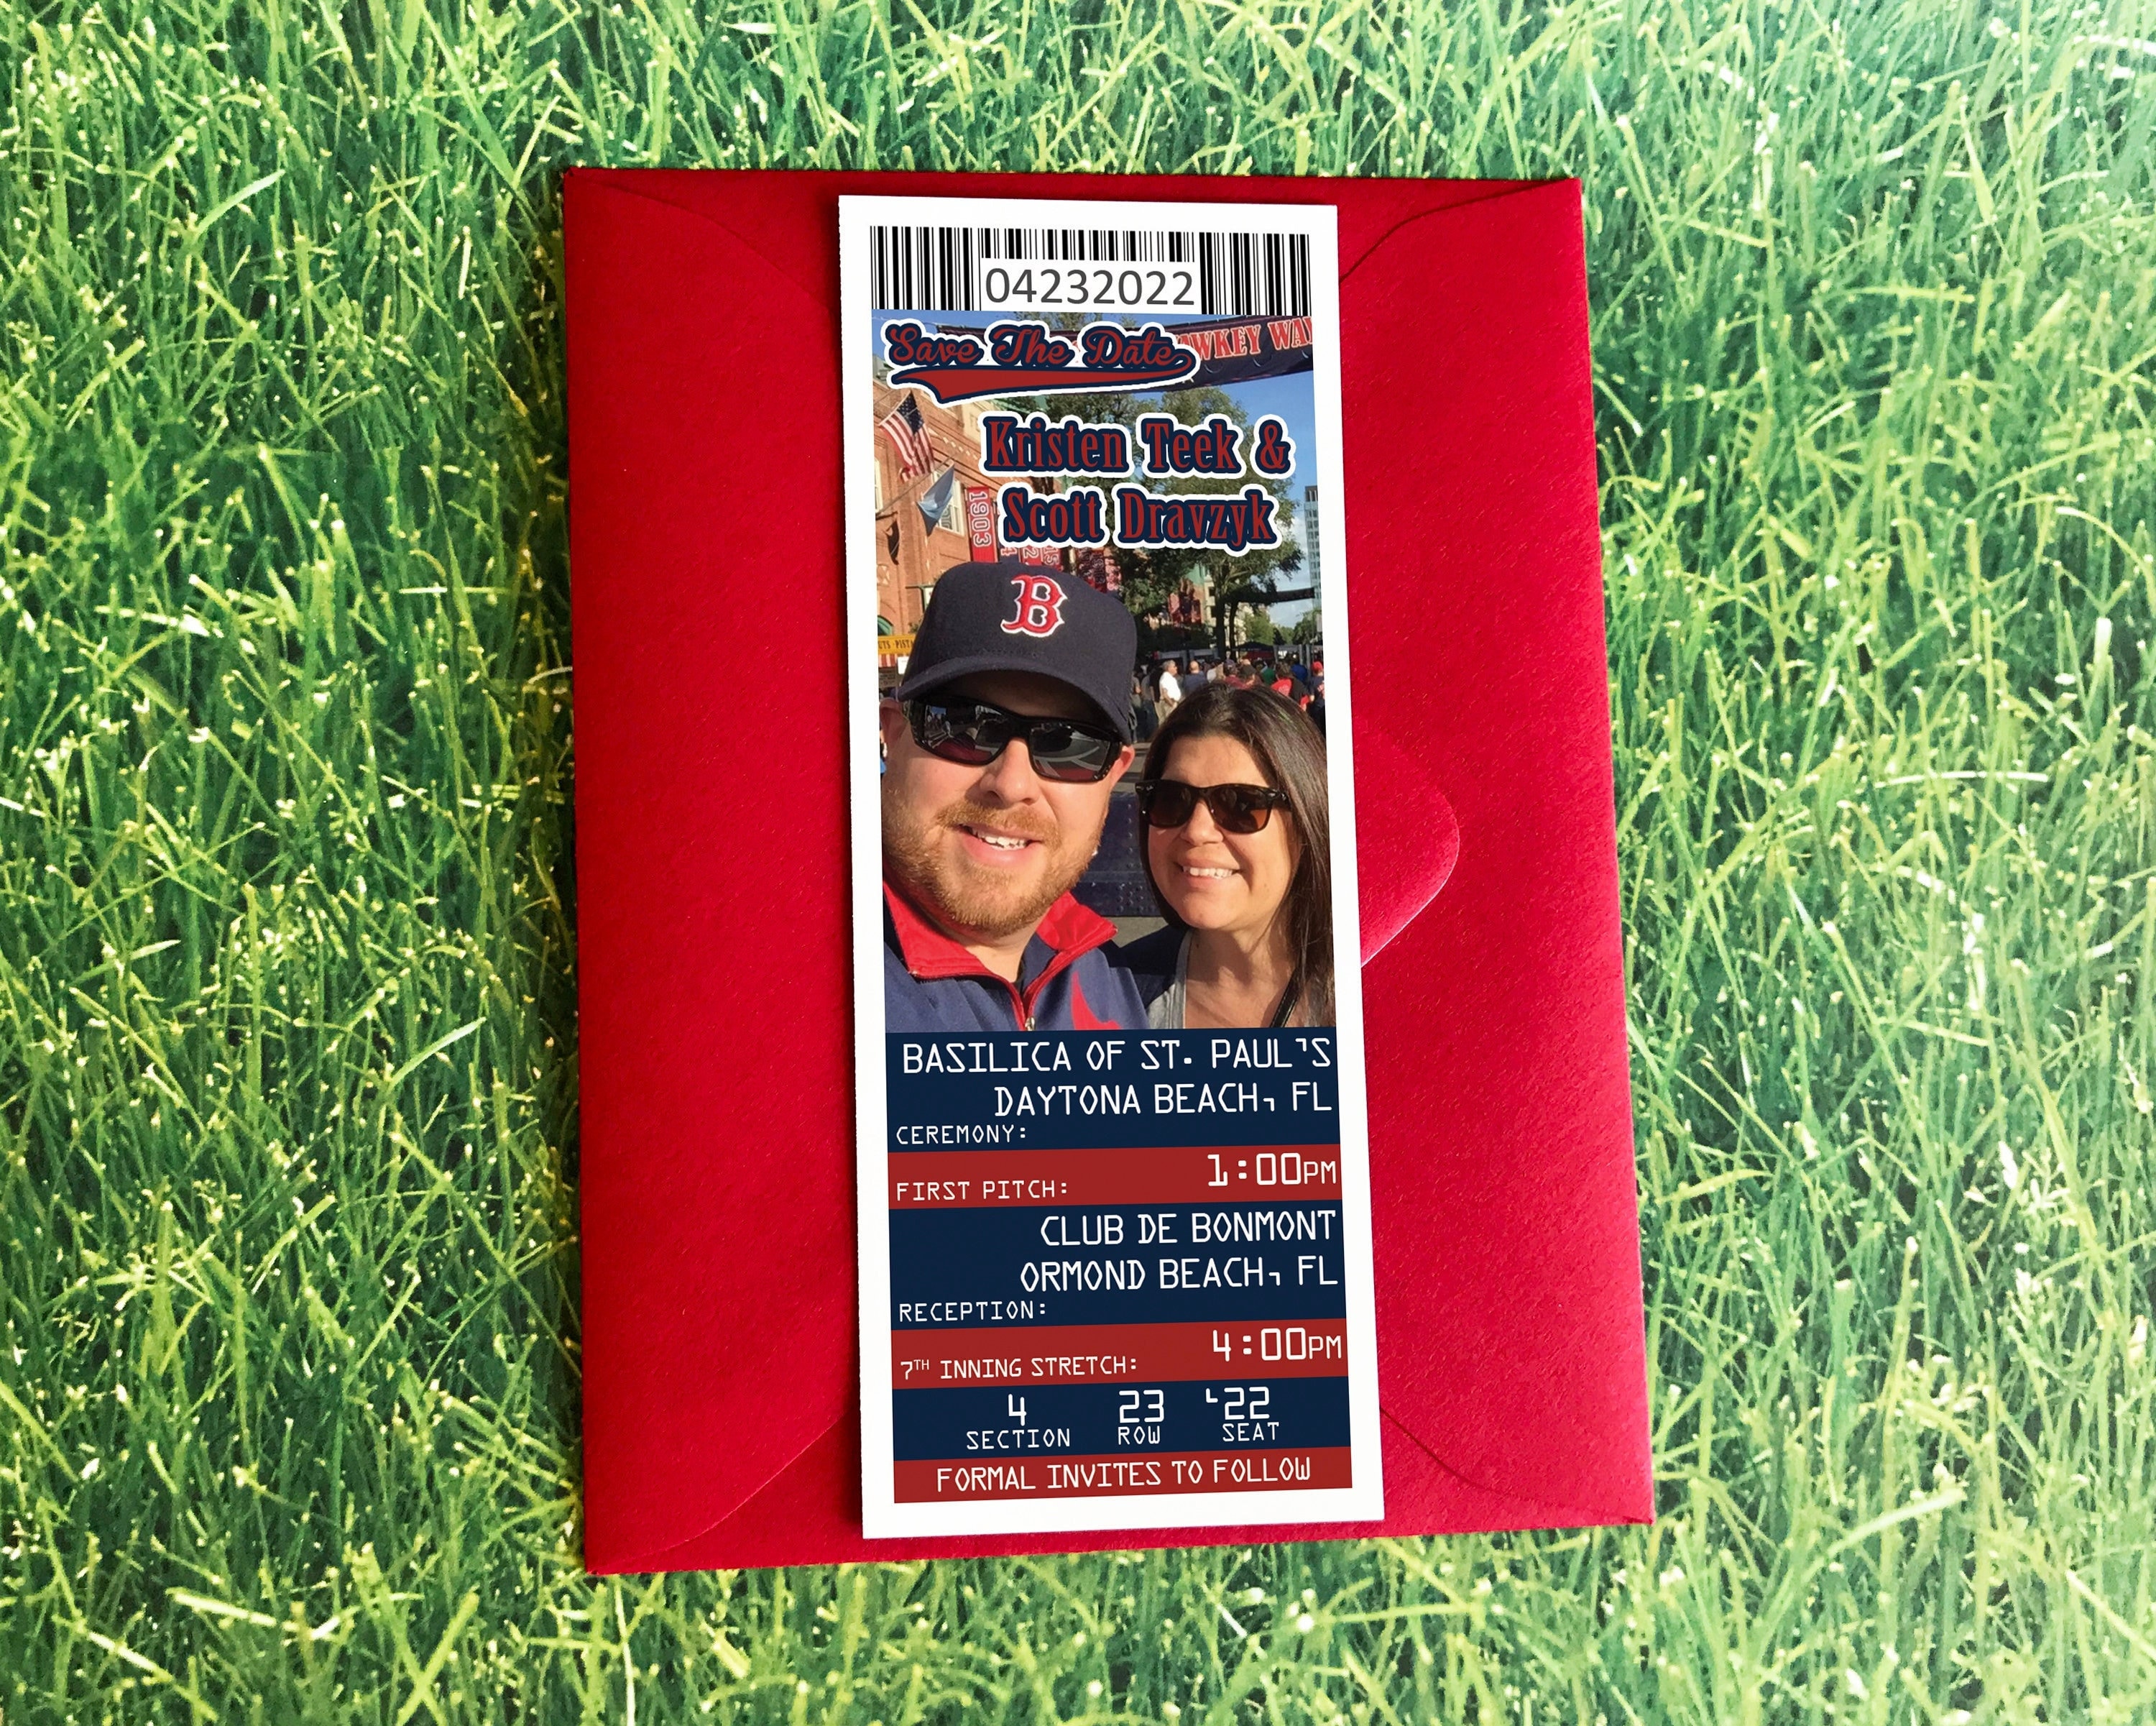 MLB Boston Red Sox Ticket Birthday Invitations